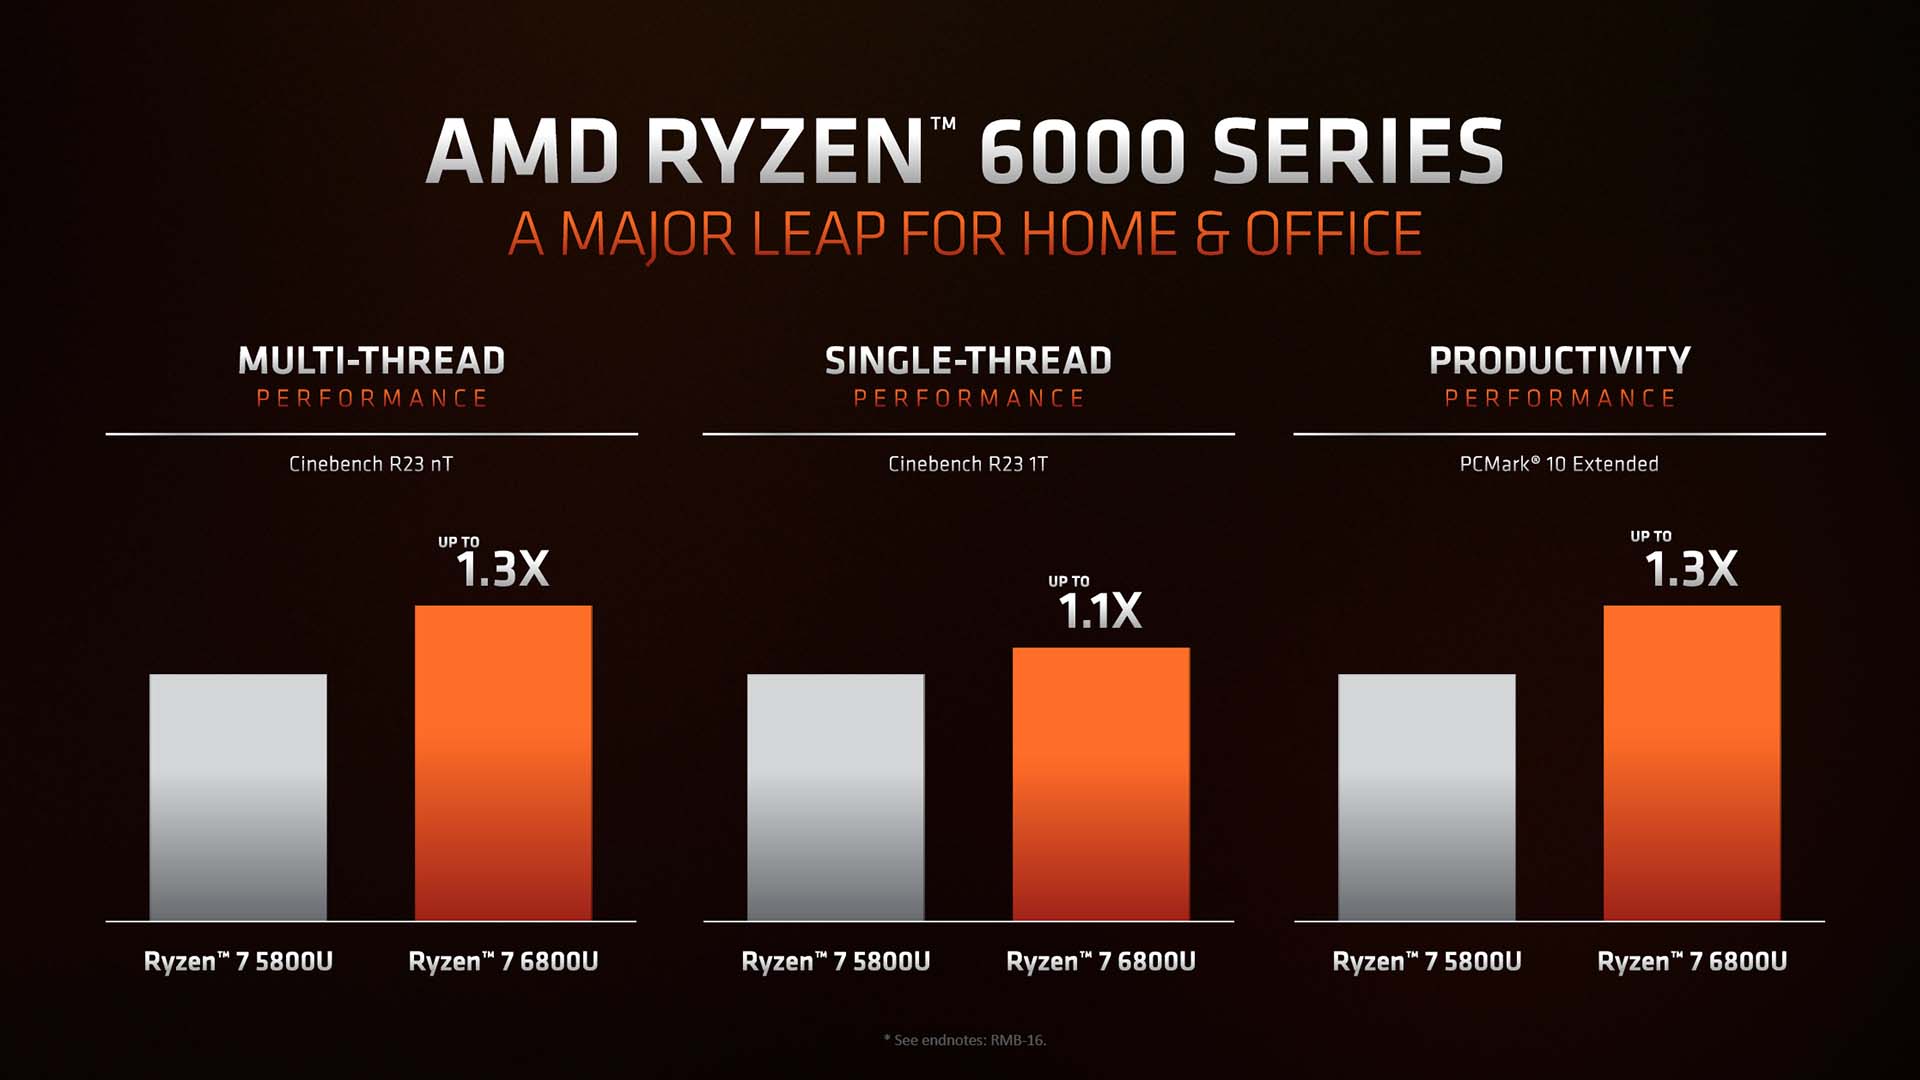 AMD Ryzen 6000 processor performance graphs provided by AMD